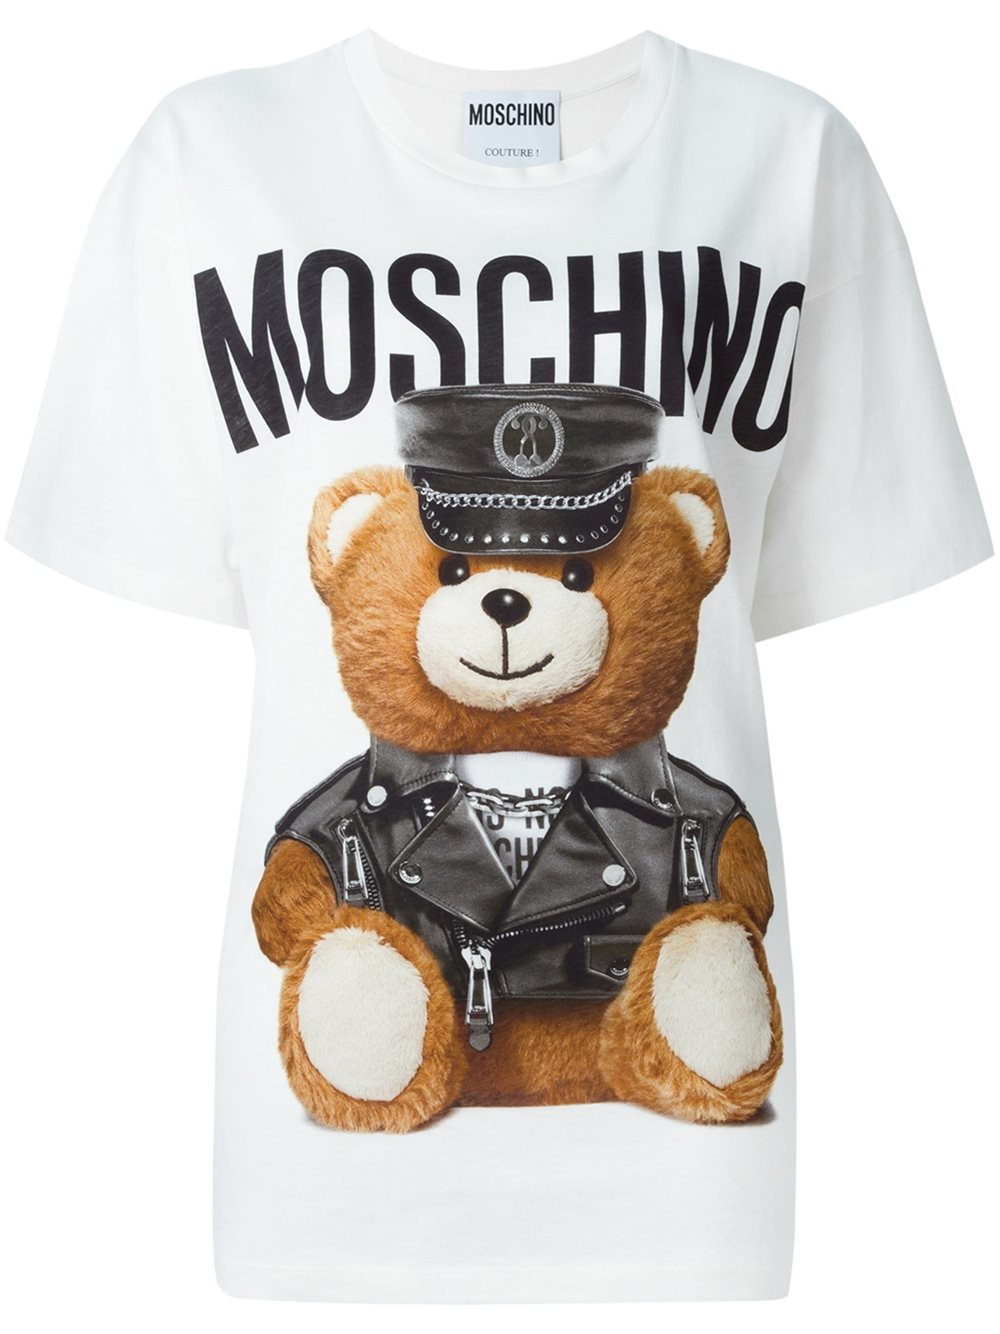 Moschino t shirt womens teddy bear cheap cotton